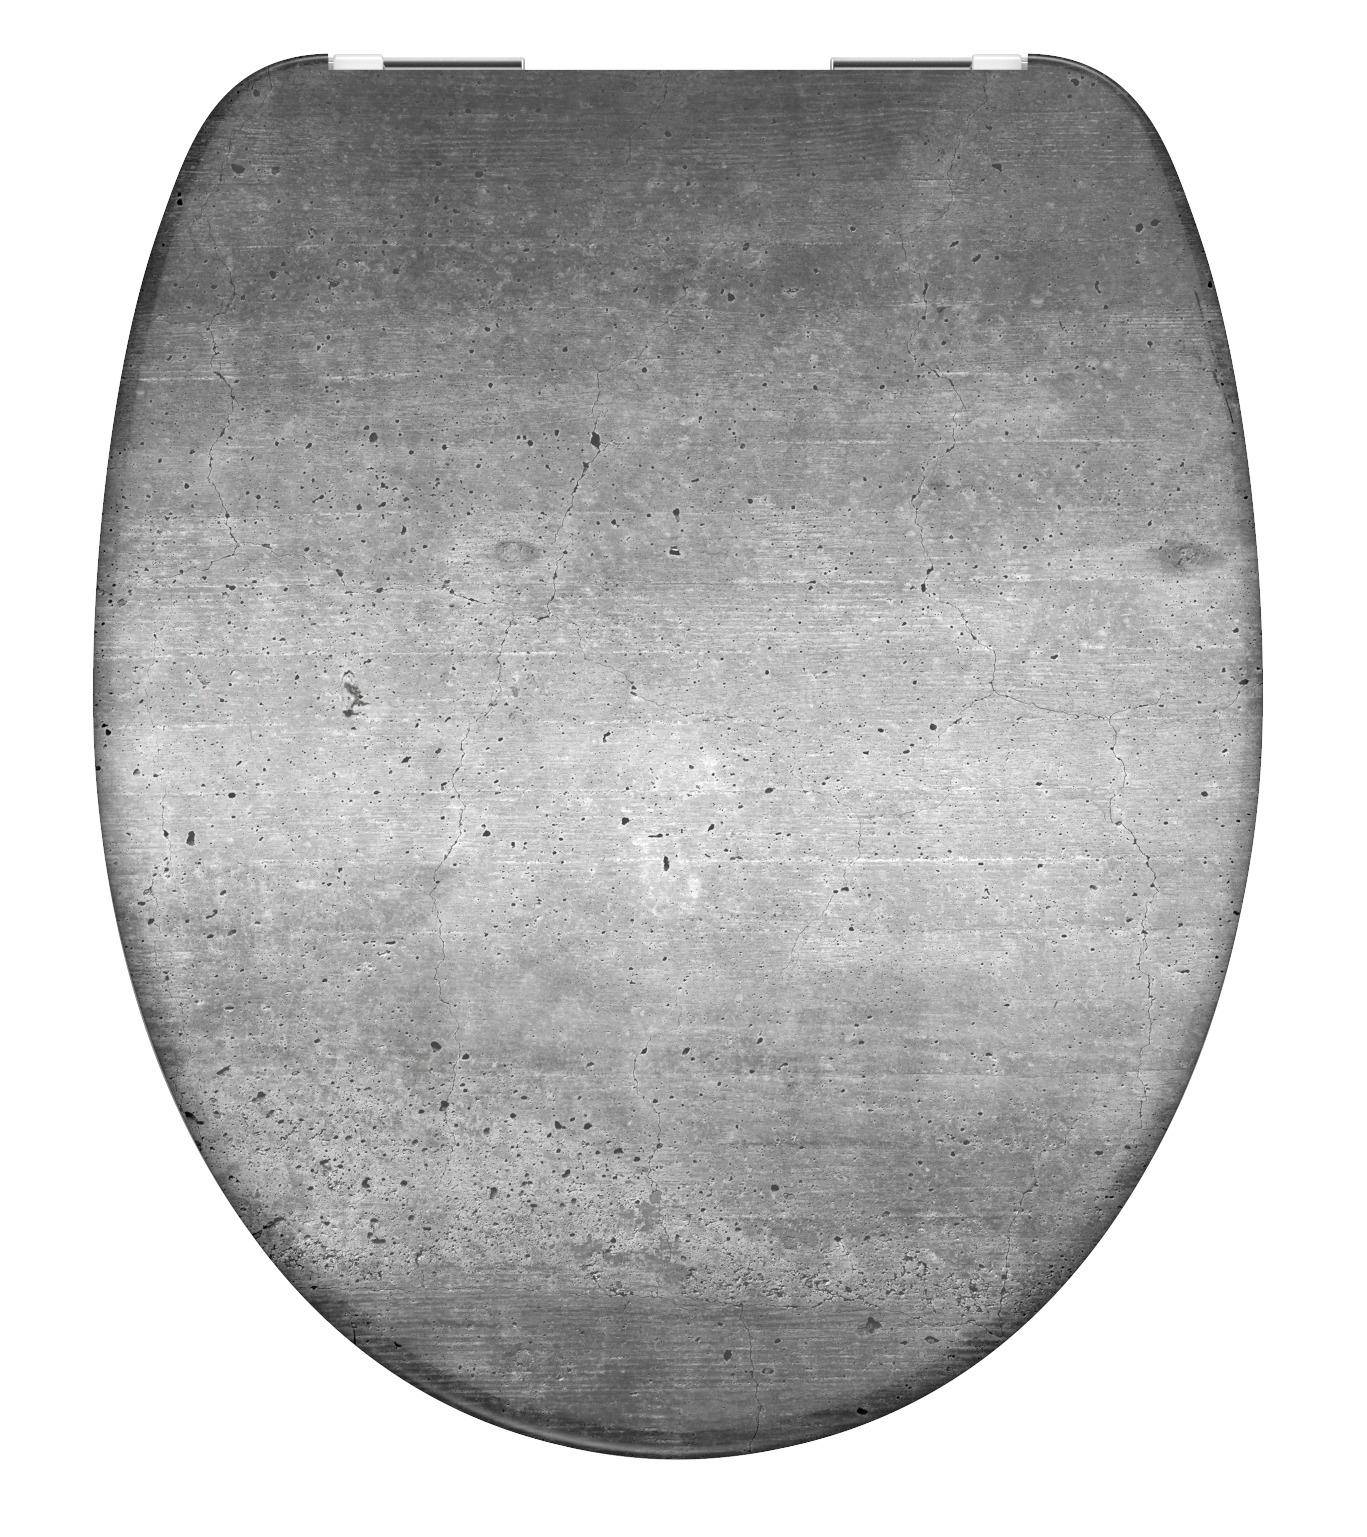 Wc Sedátko Industial Grey -Sb- - šedá, plast (37,2/1,4/44,5cm) - Schütte